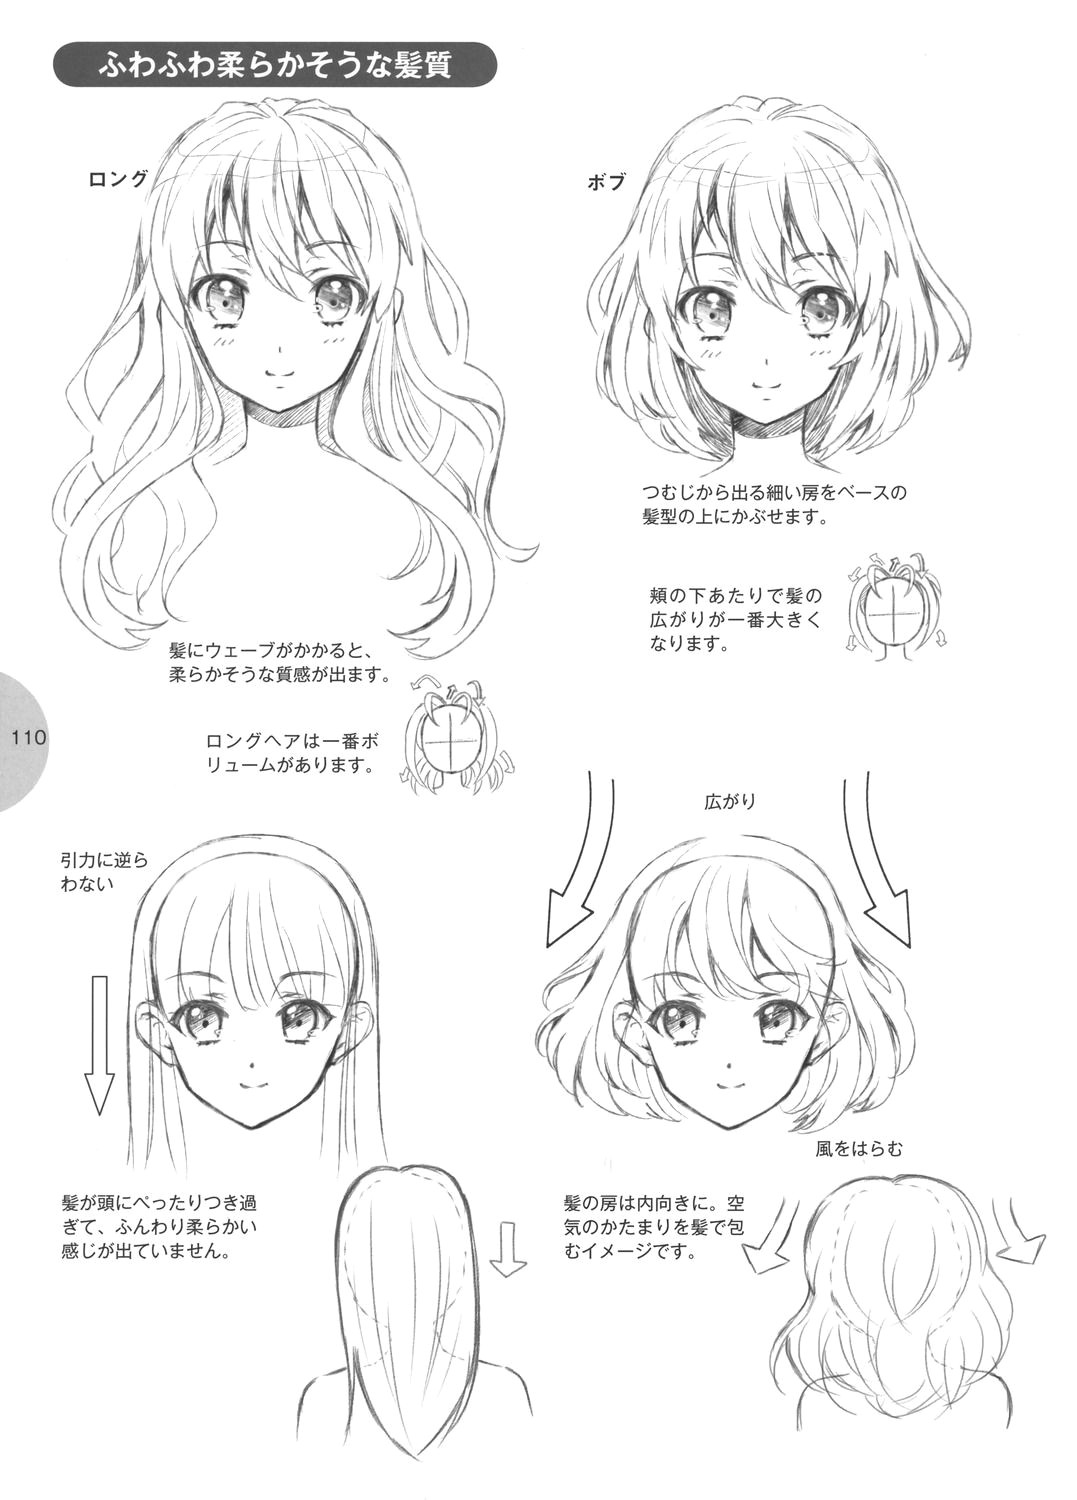 Manga Drawing Vs Anime Tutorial Hair Artsy Inpirations Pinterest Drawings Manga